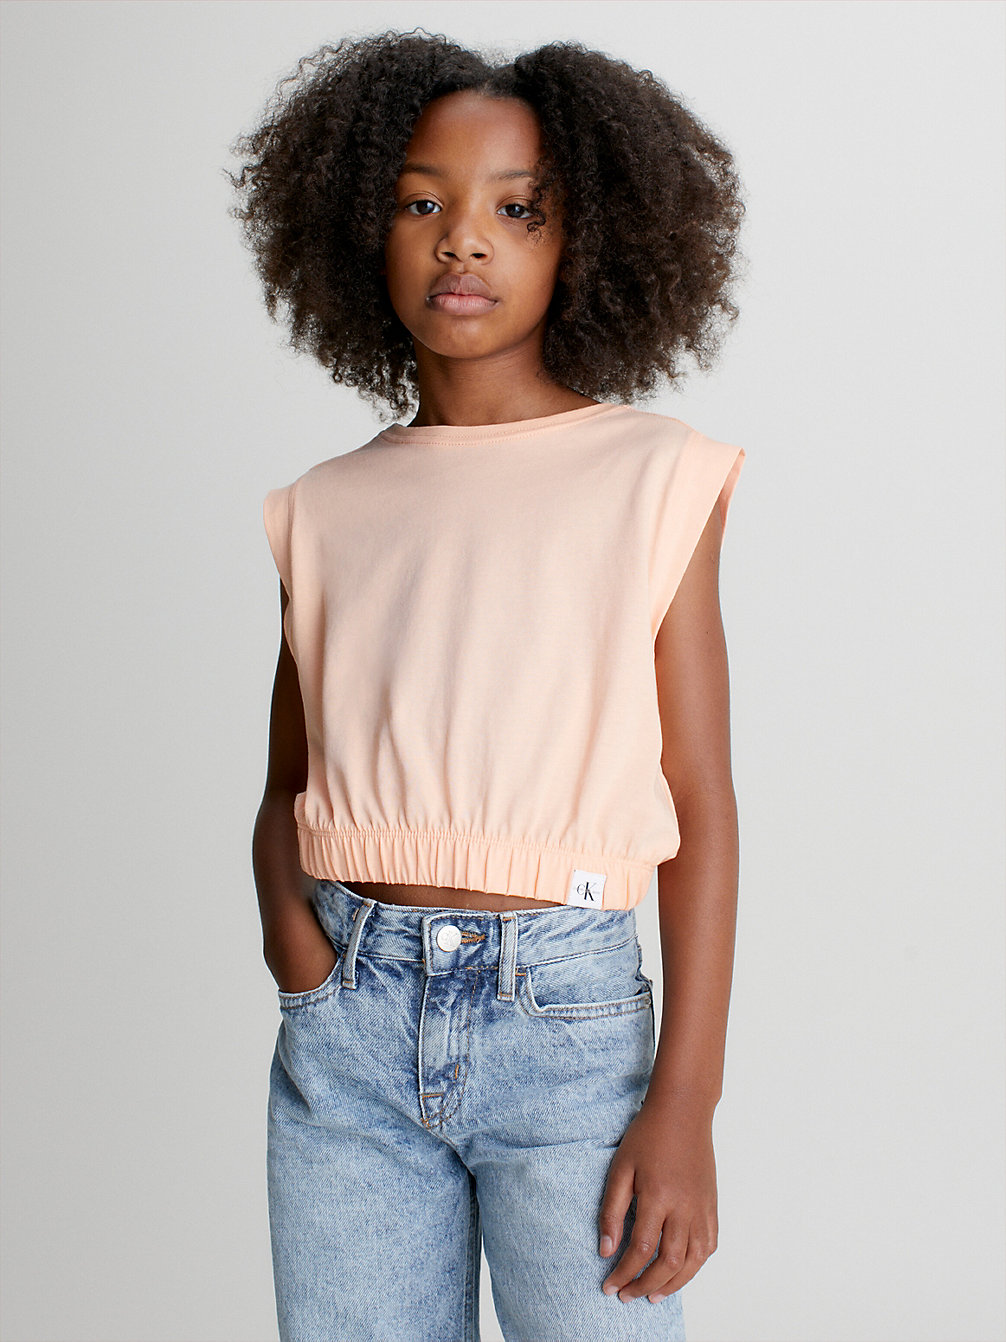 FRESH CANTALOUPE Organic Cotton Cap Sleeve Top undefined girls Calvin Klein